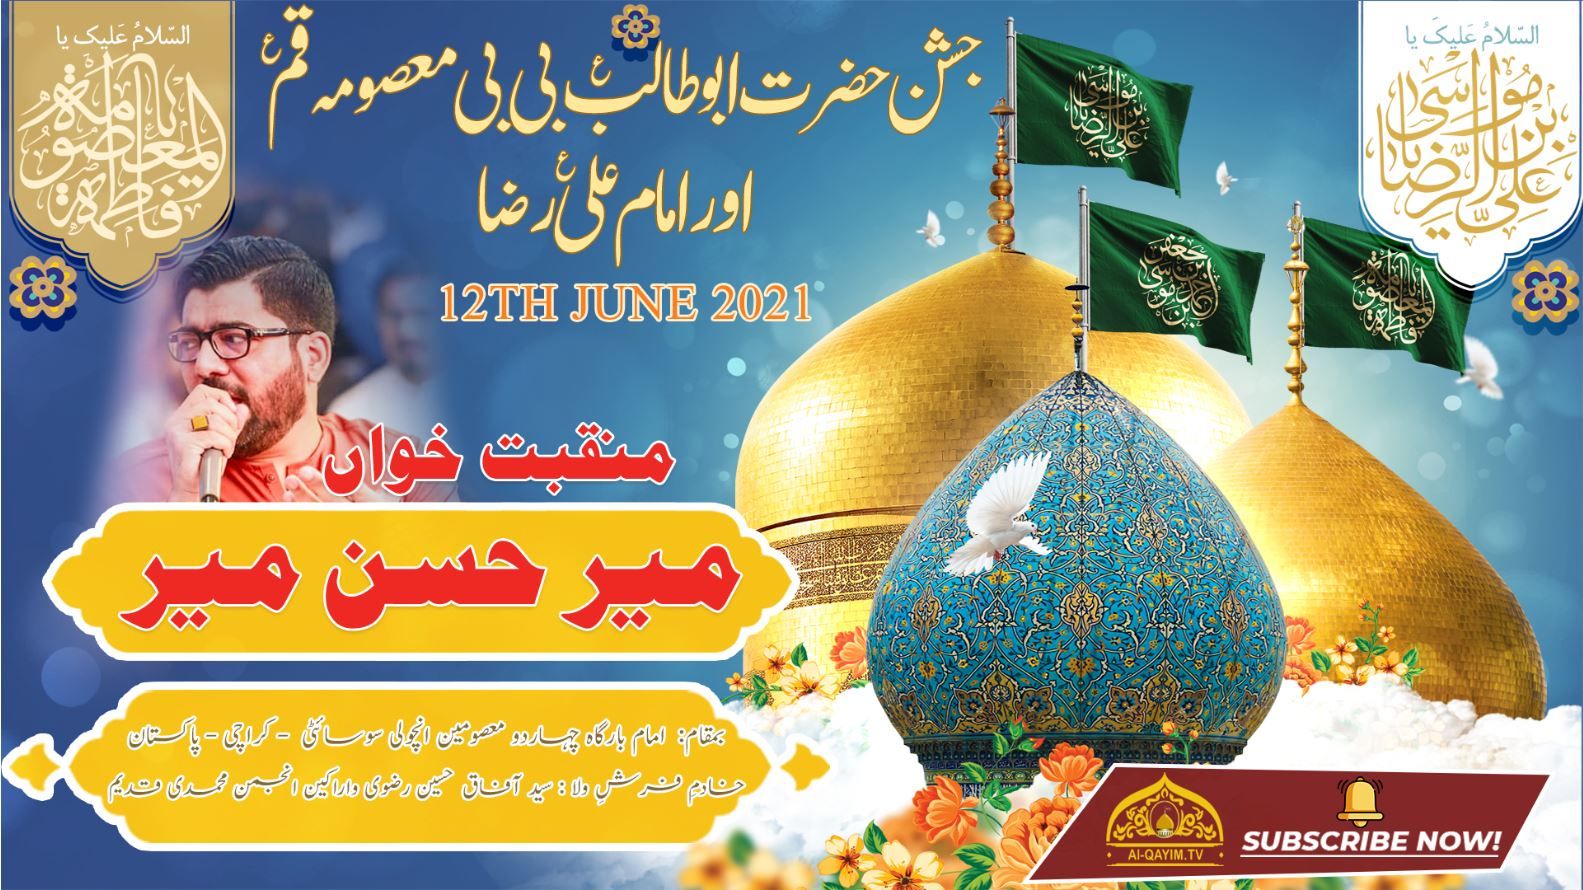 Manqabat | Mir Hasan Mir | Jashan Bibi Masooma & Imam Ali Raza - 12 June 2021 - Ancholi - Karachi